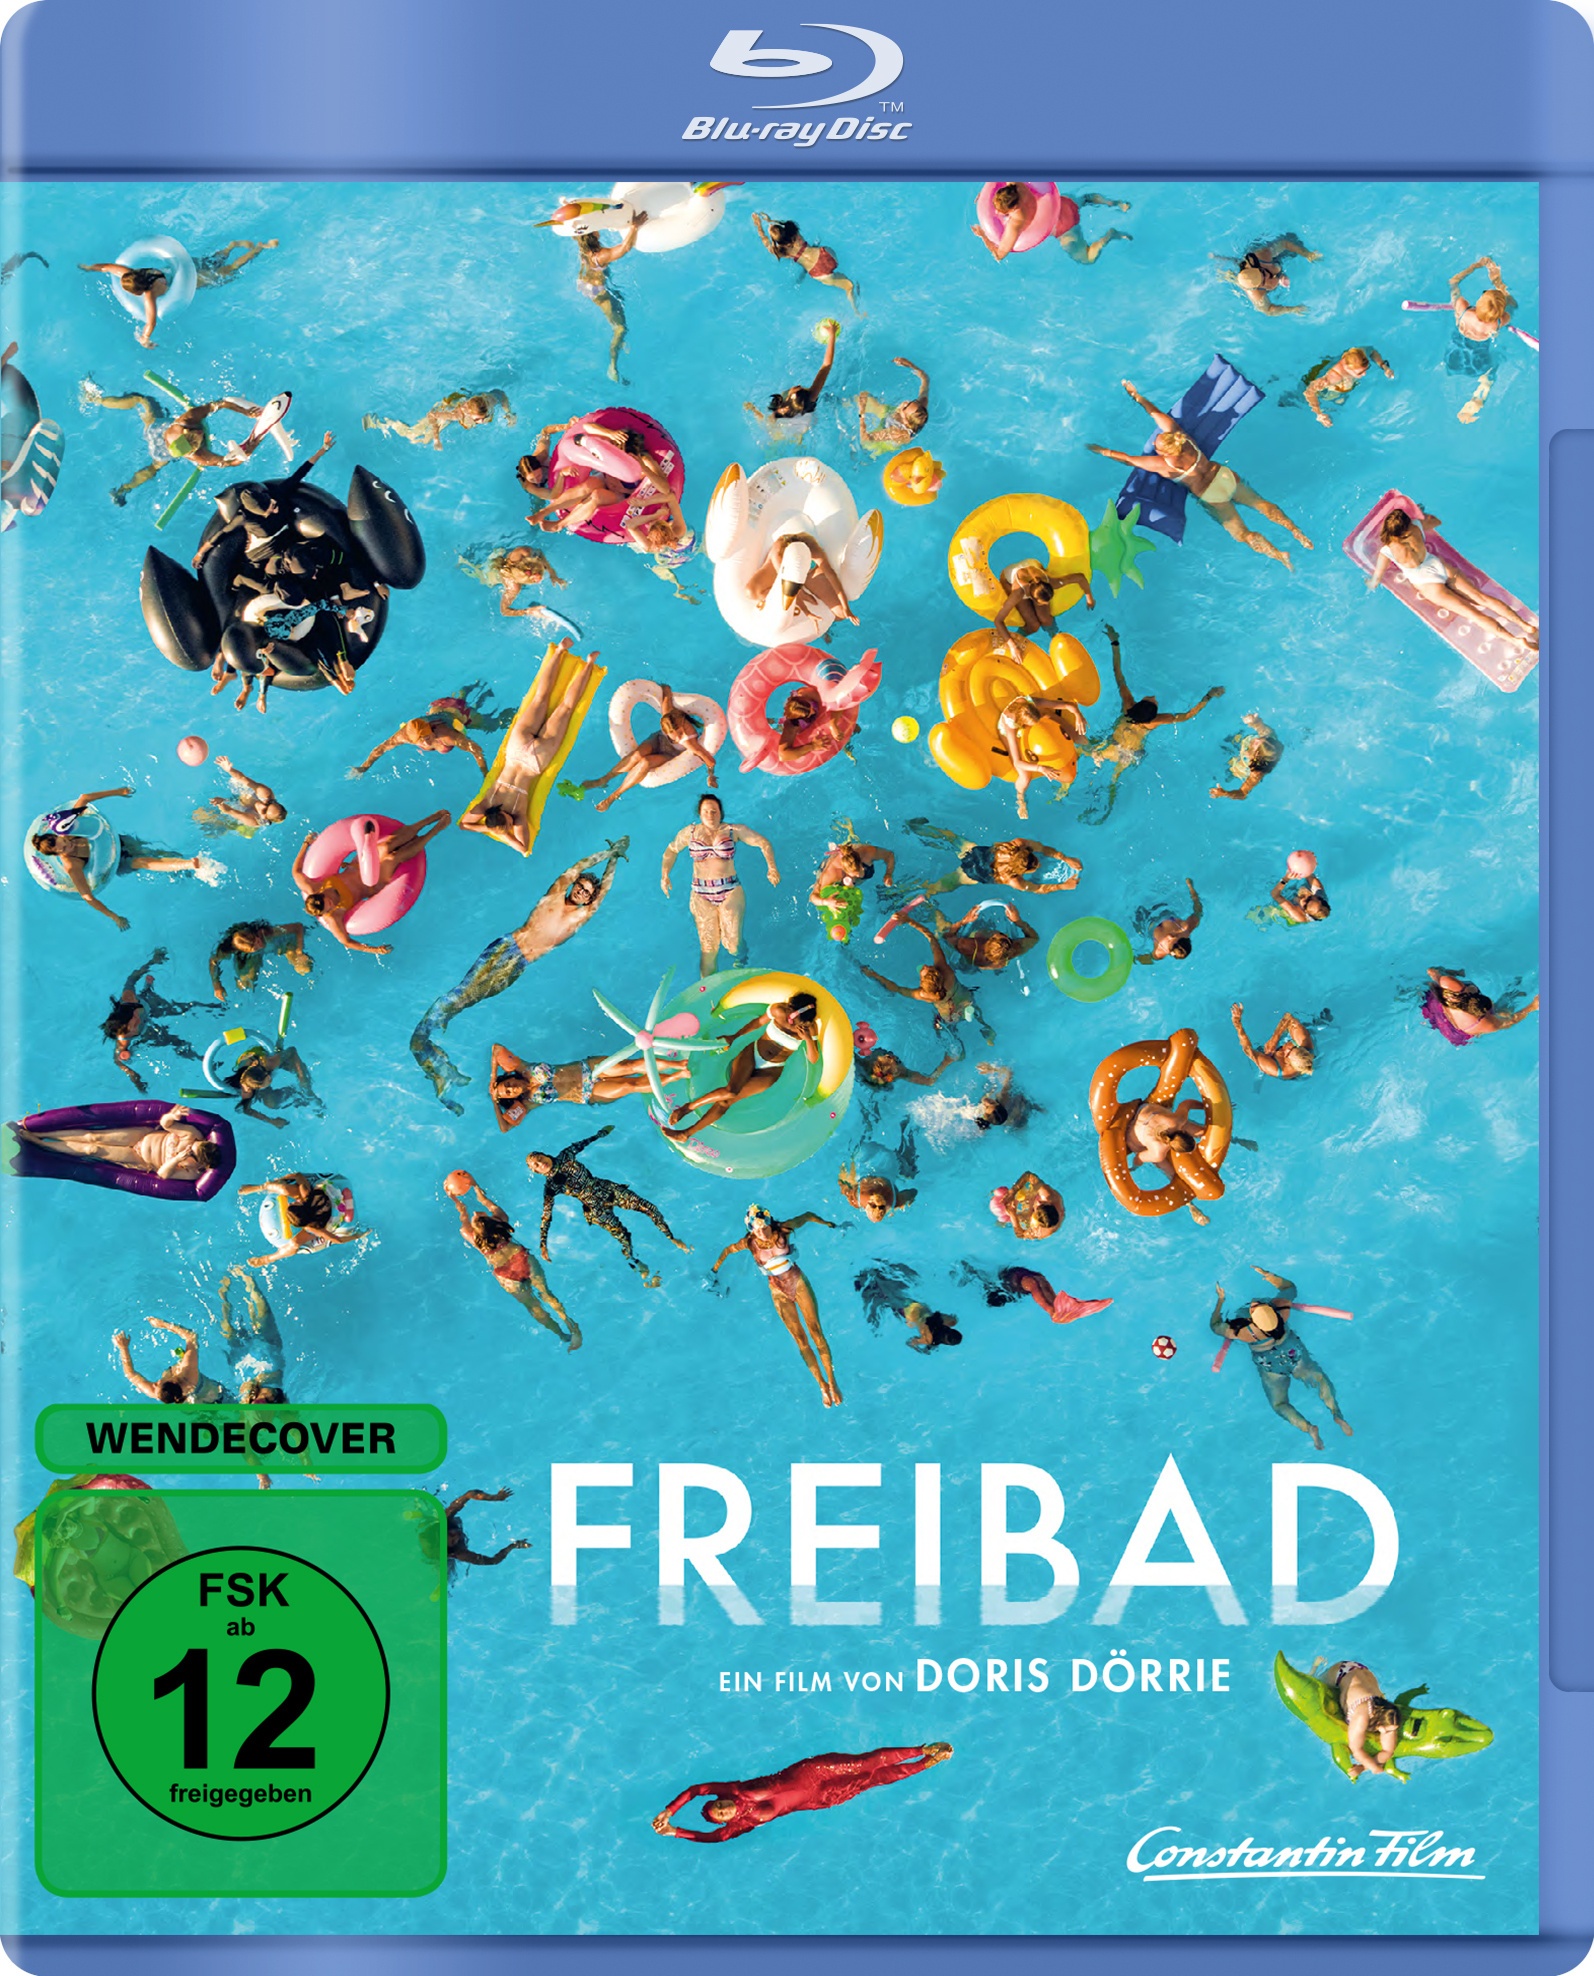 Freibad (Blu-ray)